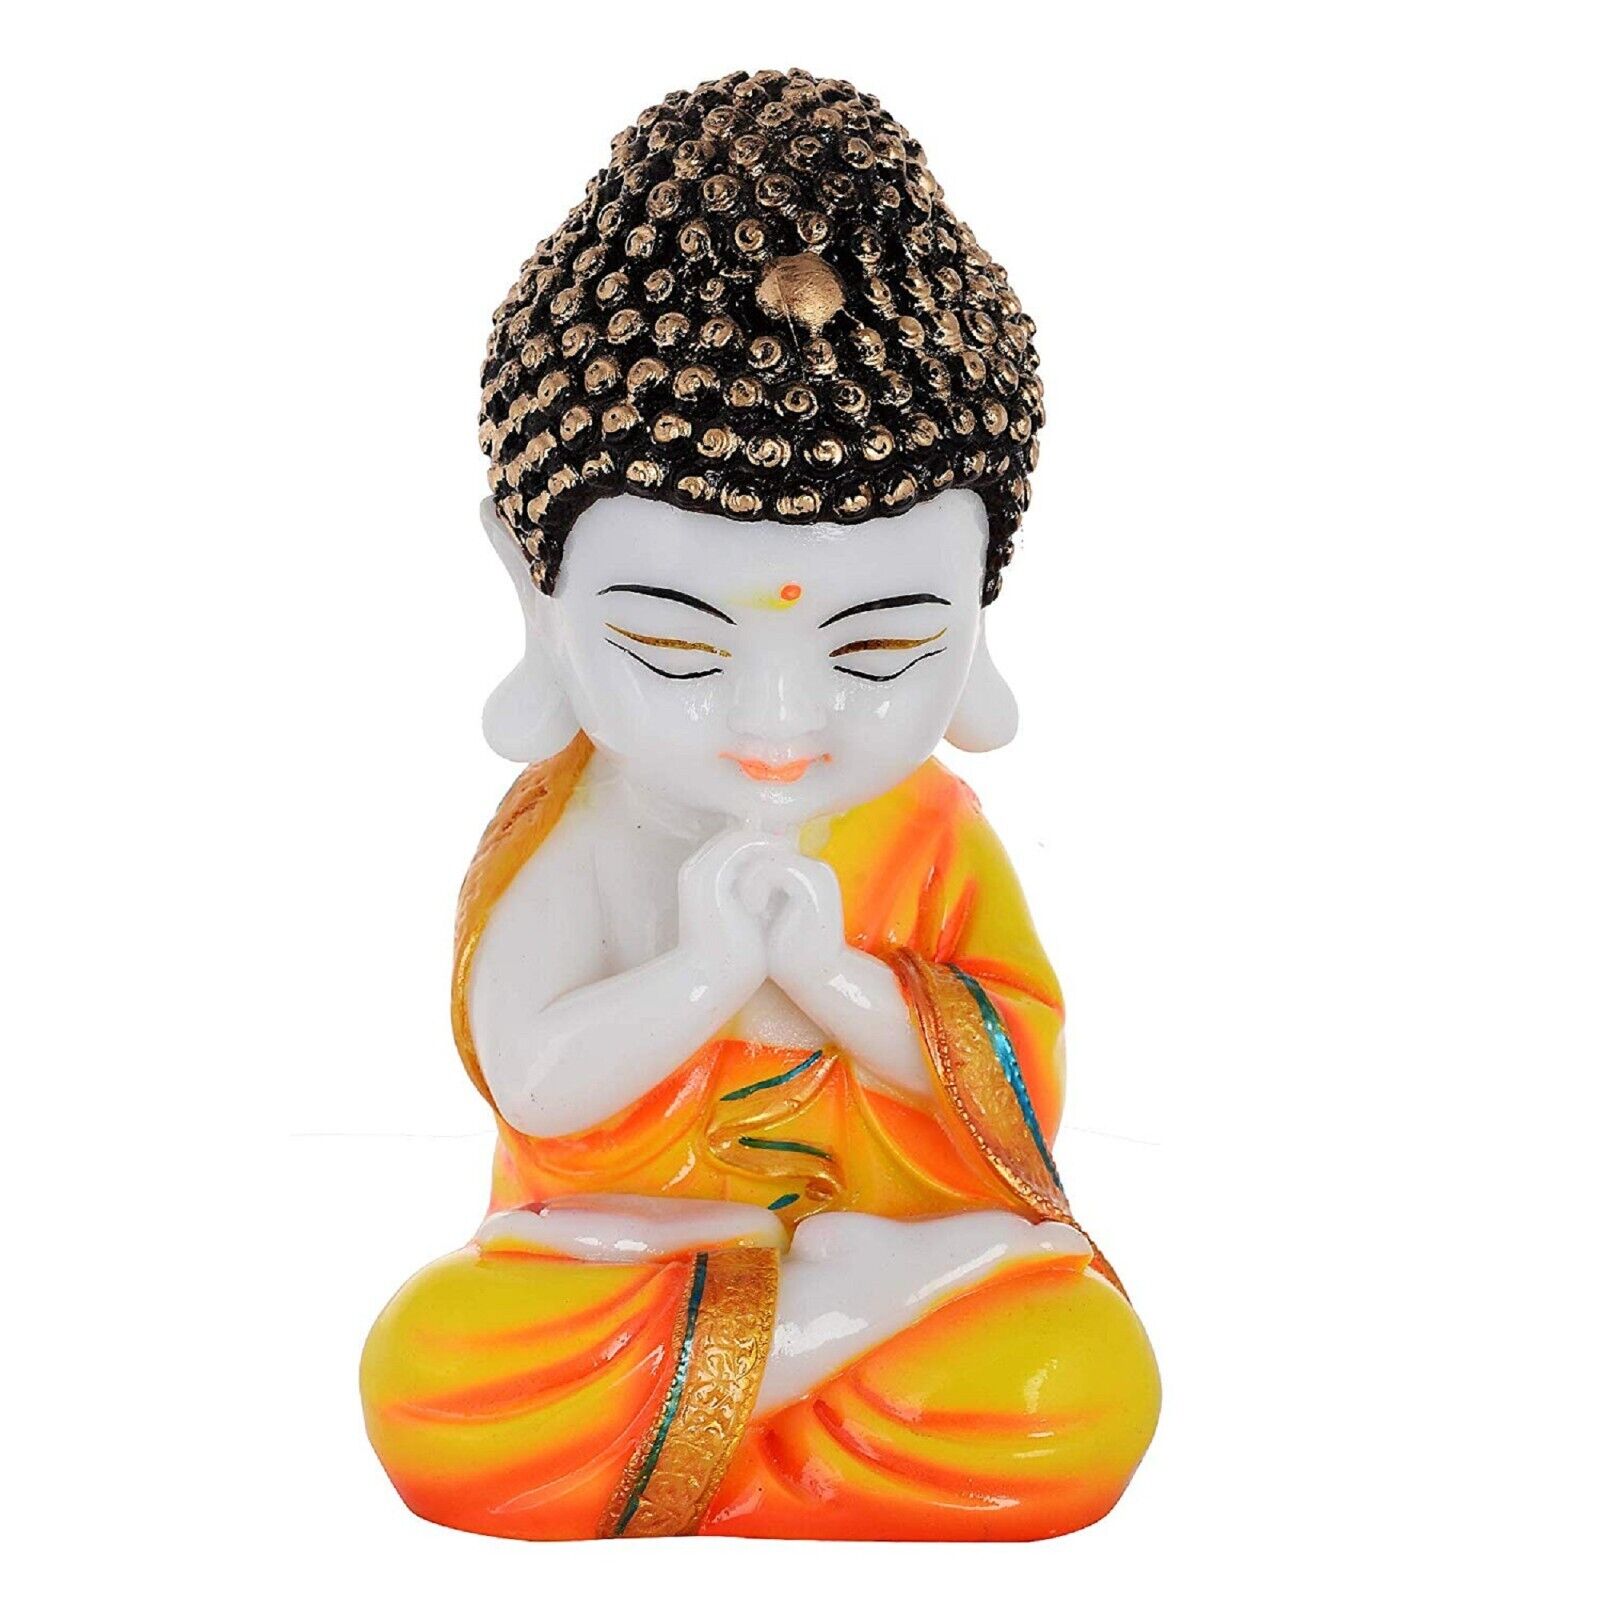 Indian Handmade Orange Sitting Buddha For Yoga Meditation Statue, Decor Budda